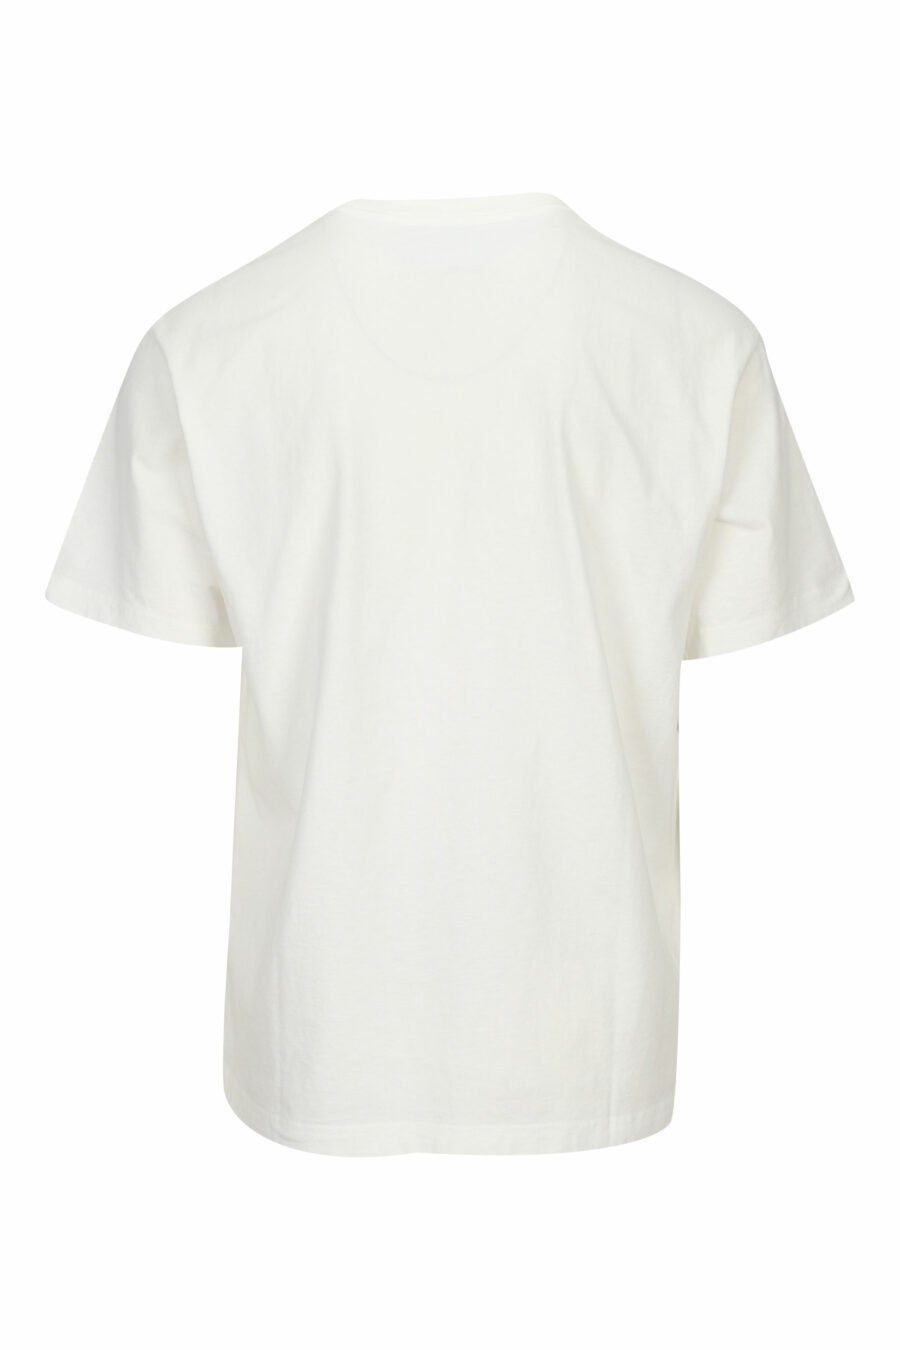 T-shirt blanc avec maxilogo diagonal "kenzo orange" - 3612230627000 1